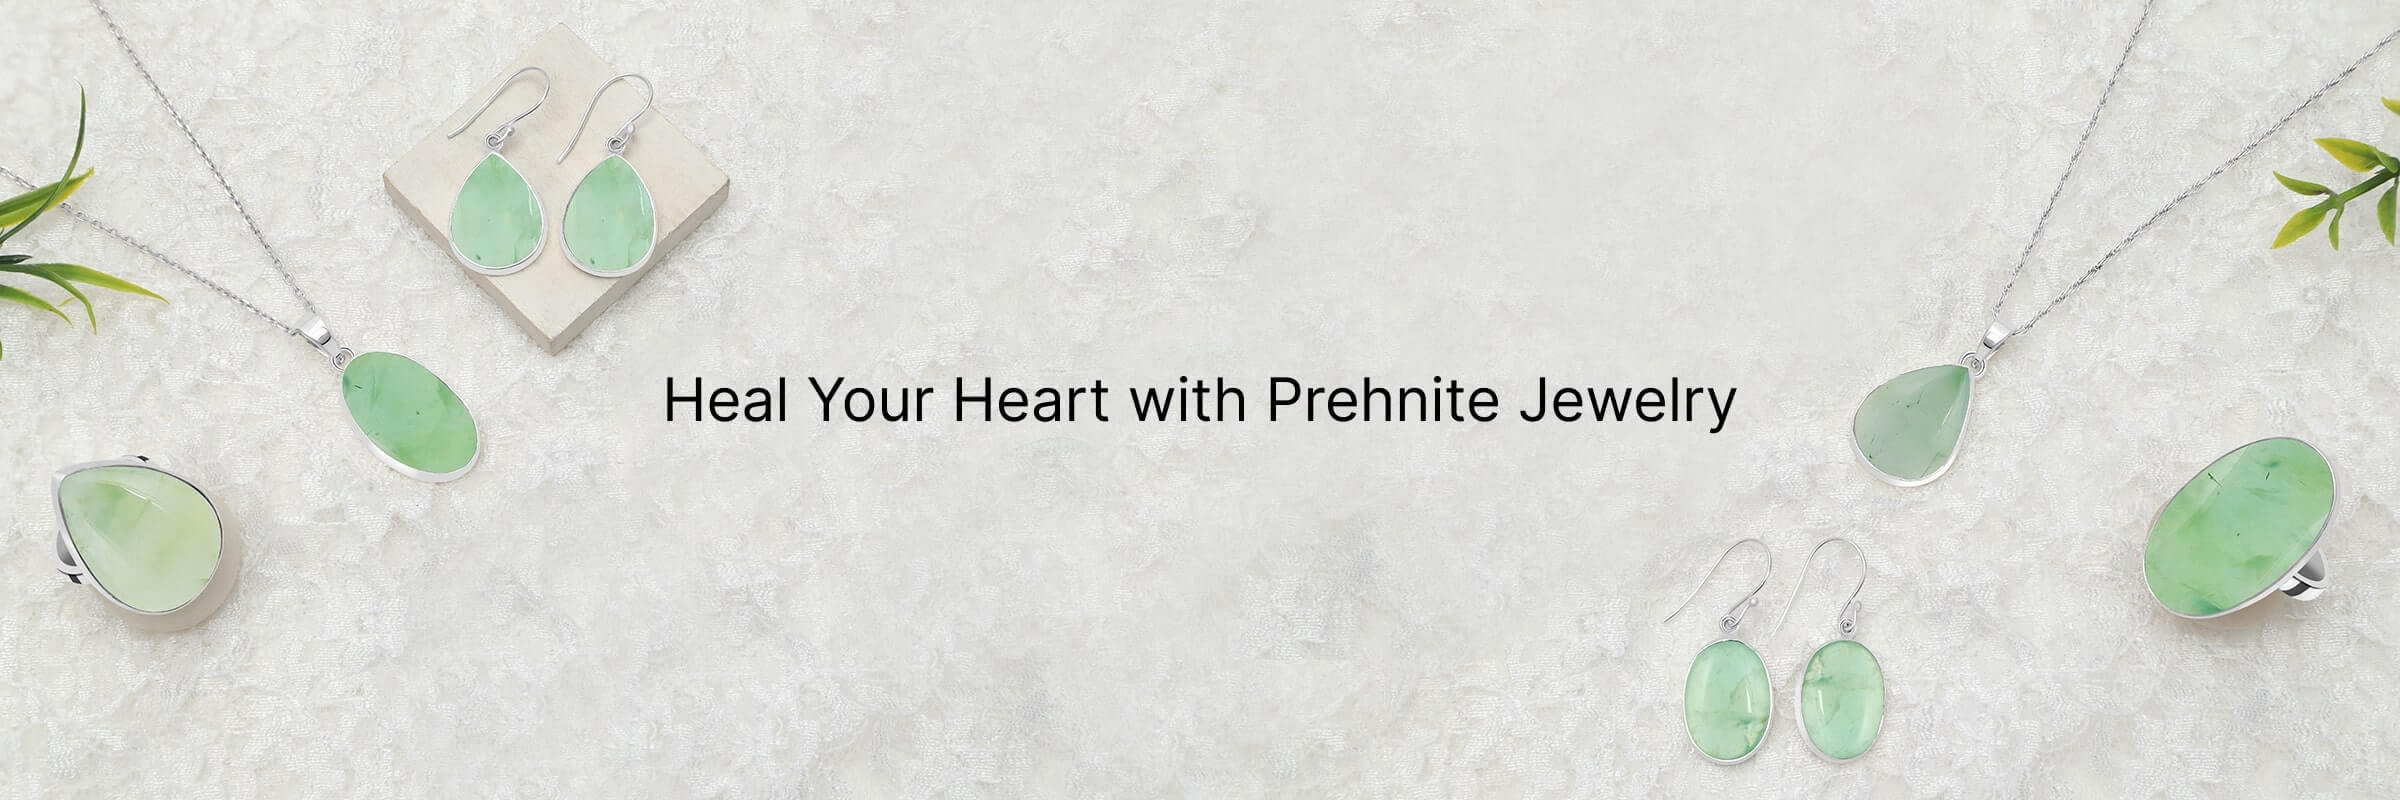 Prehnite Jewelry Feelings and Emotional Healing